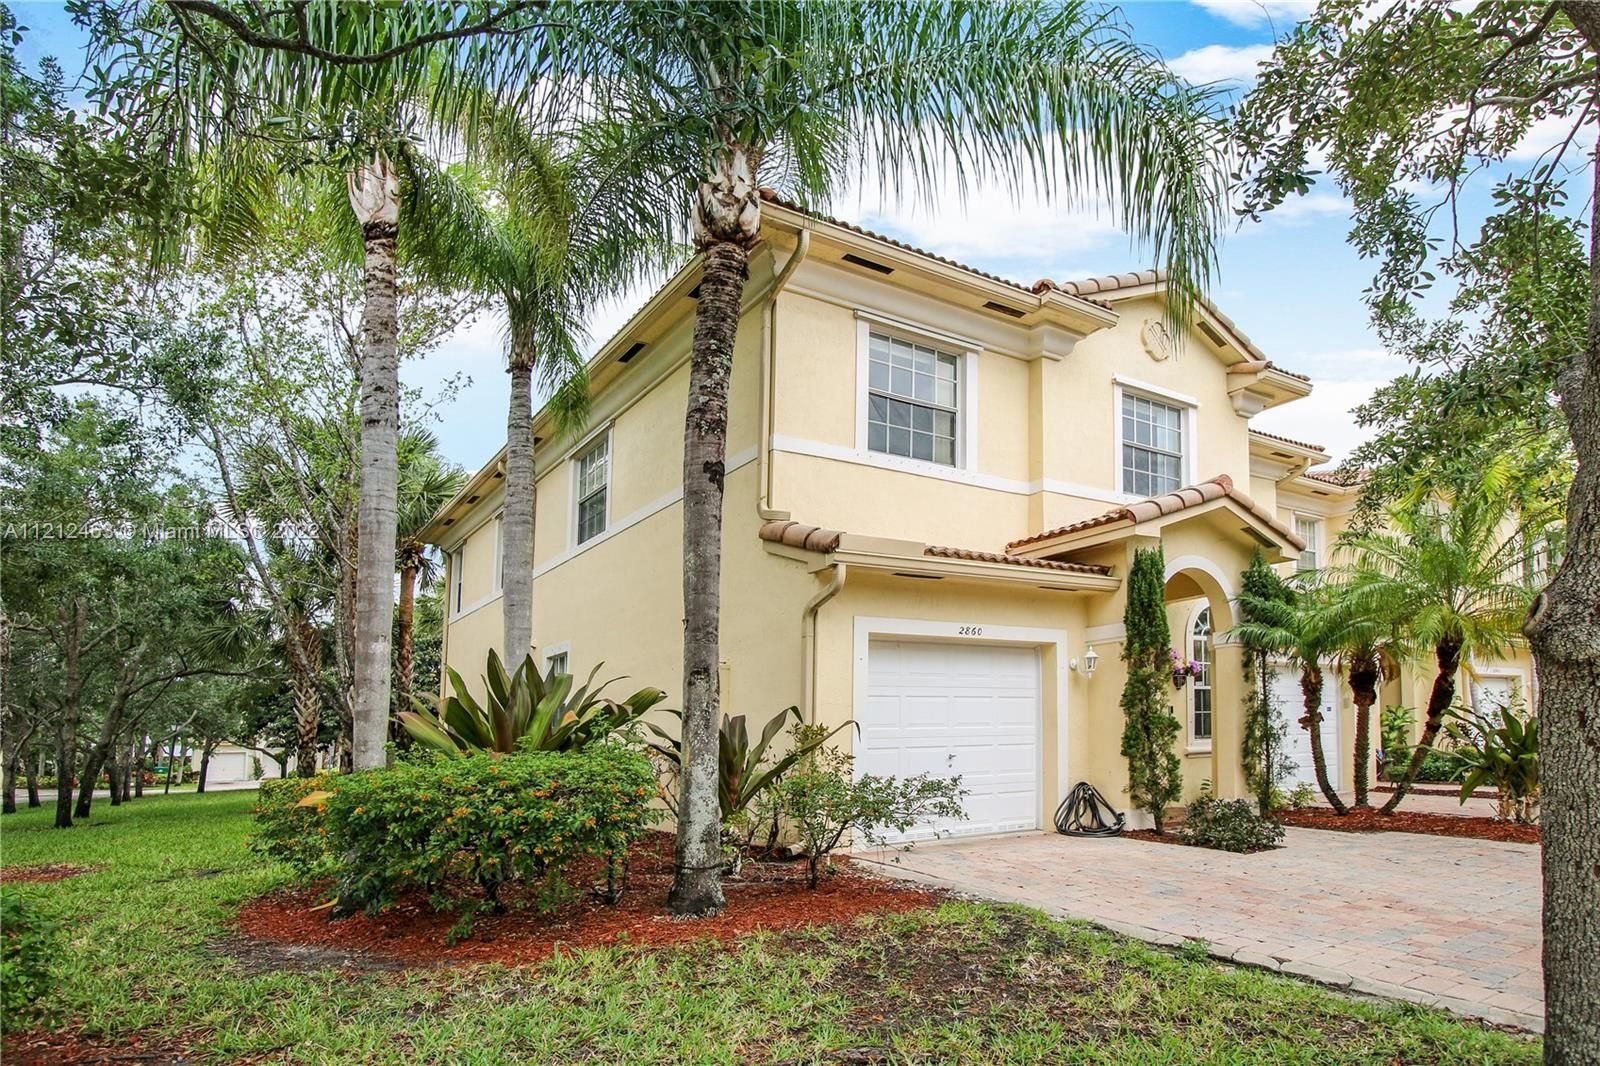 Real estate property located at 2860 84th Ter #101, Broward County, Miramar, FL